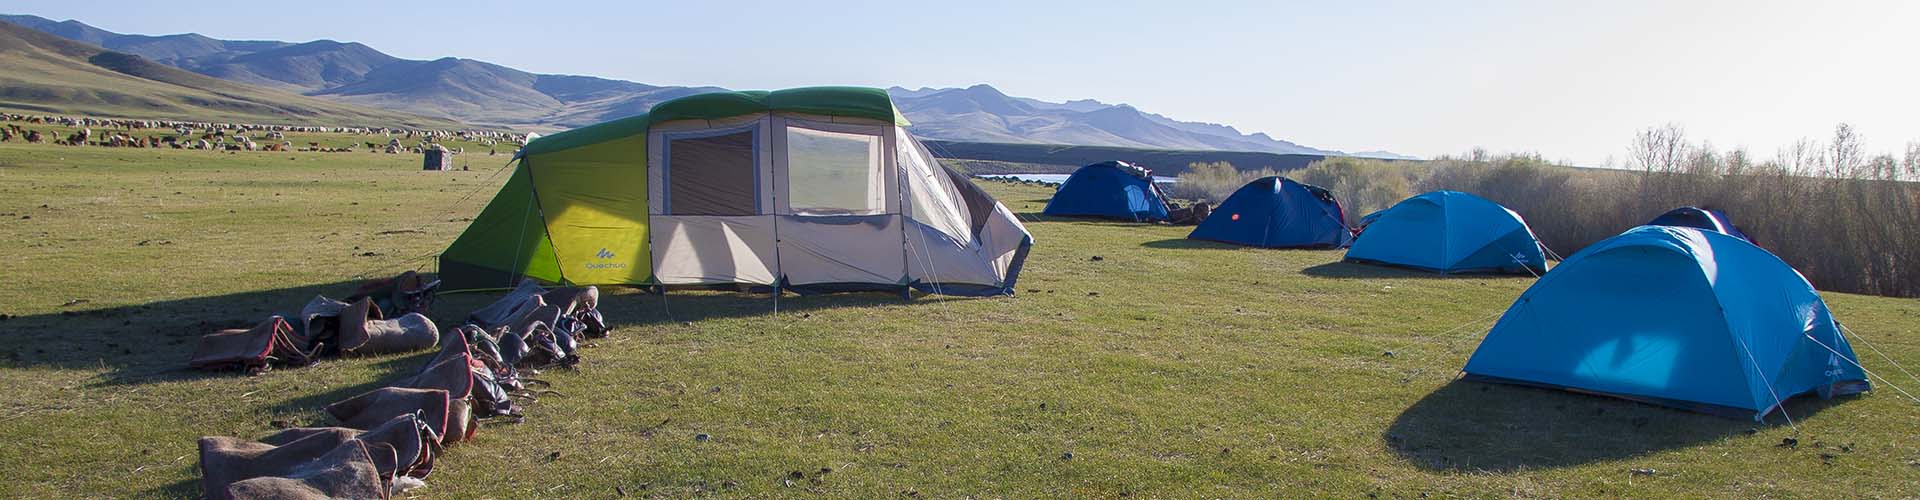 Mongolia travel and tour